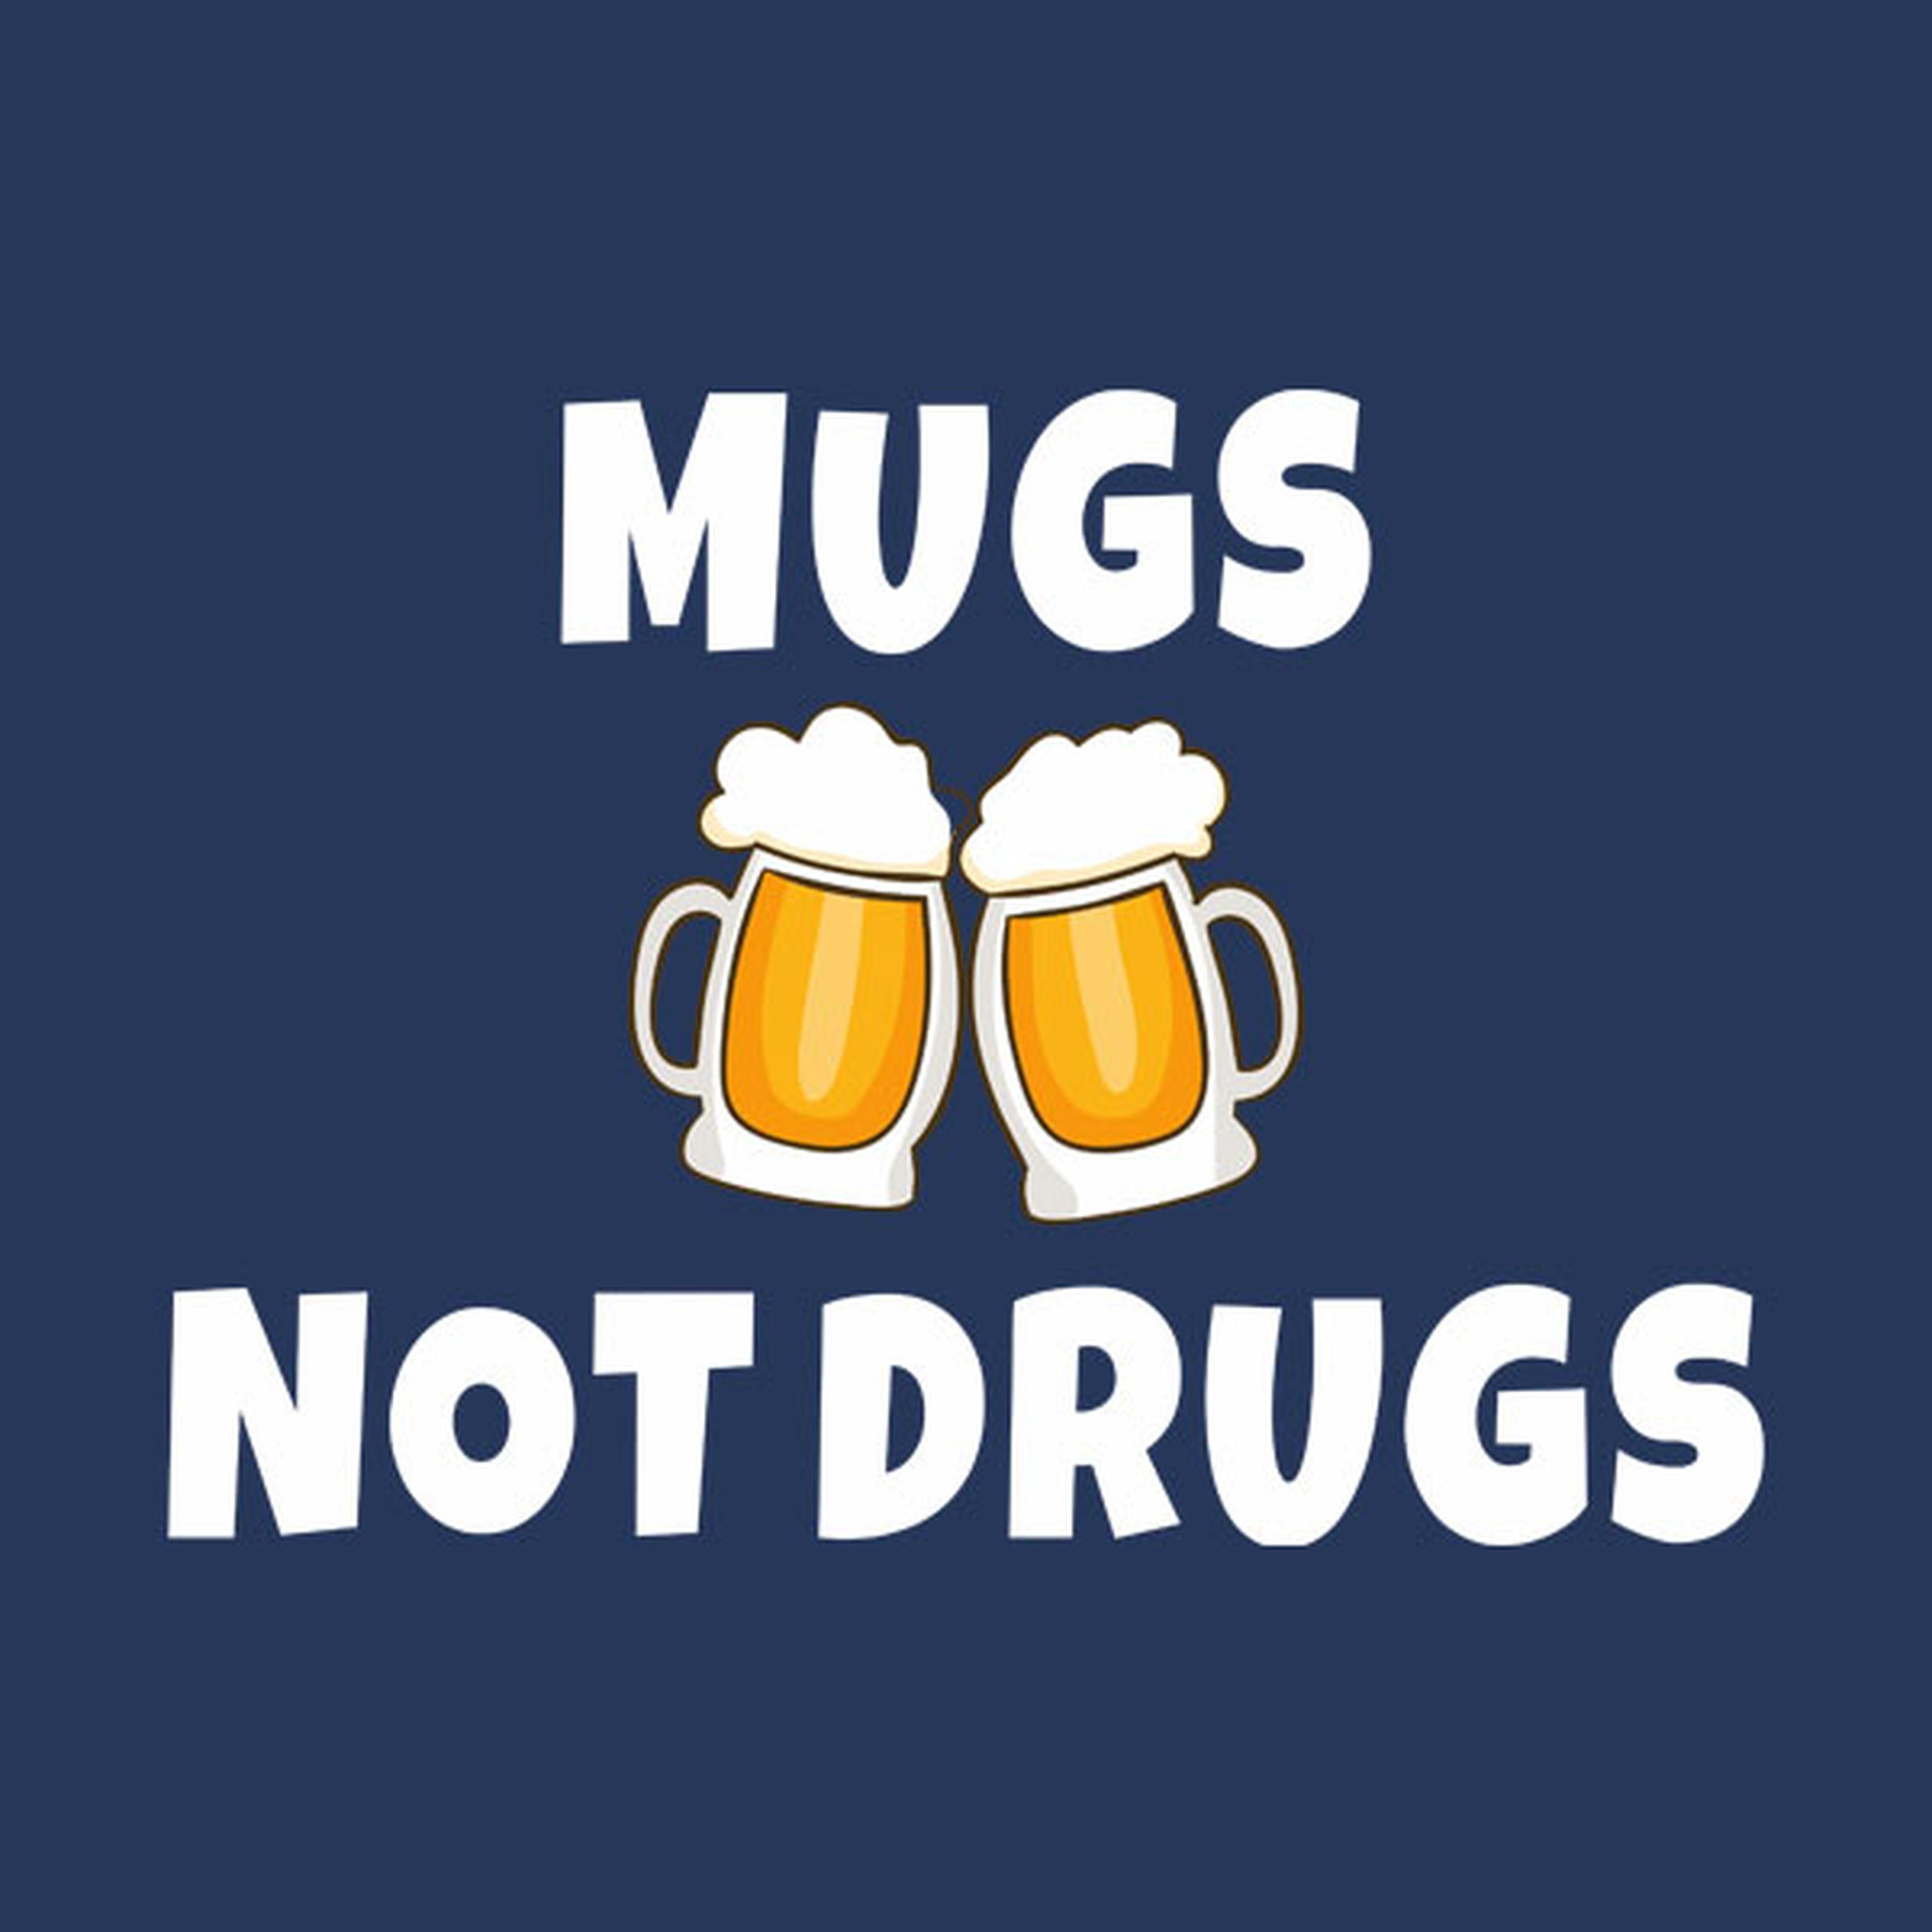 Mugs, not drugs - T-shirt